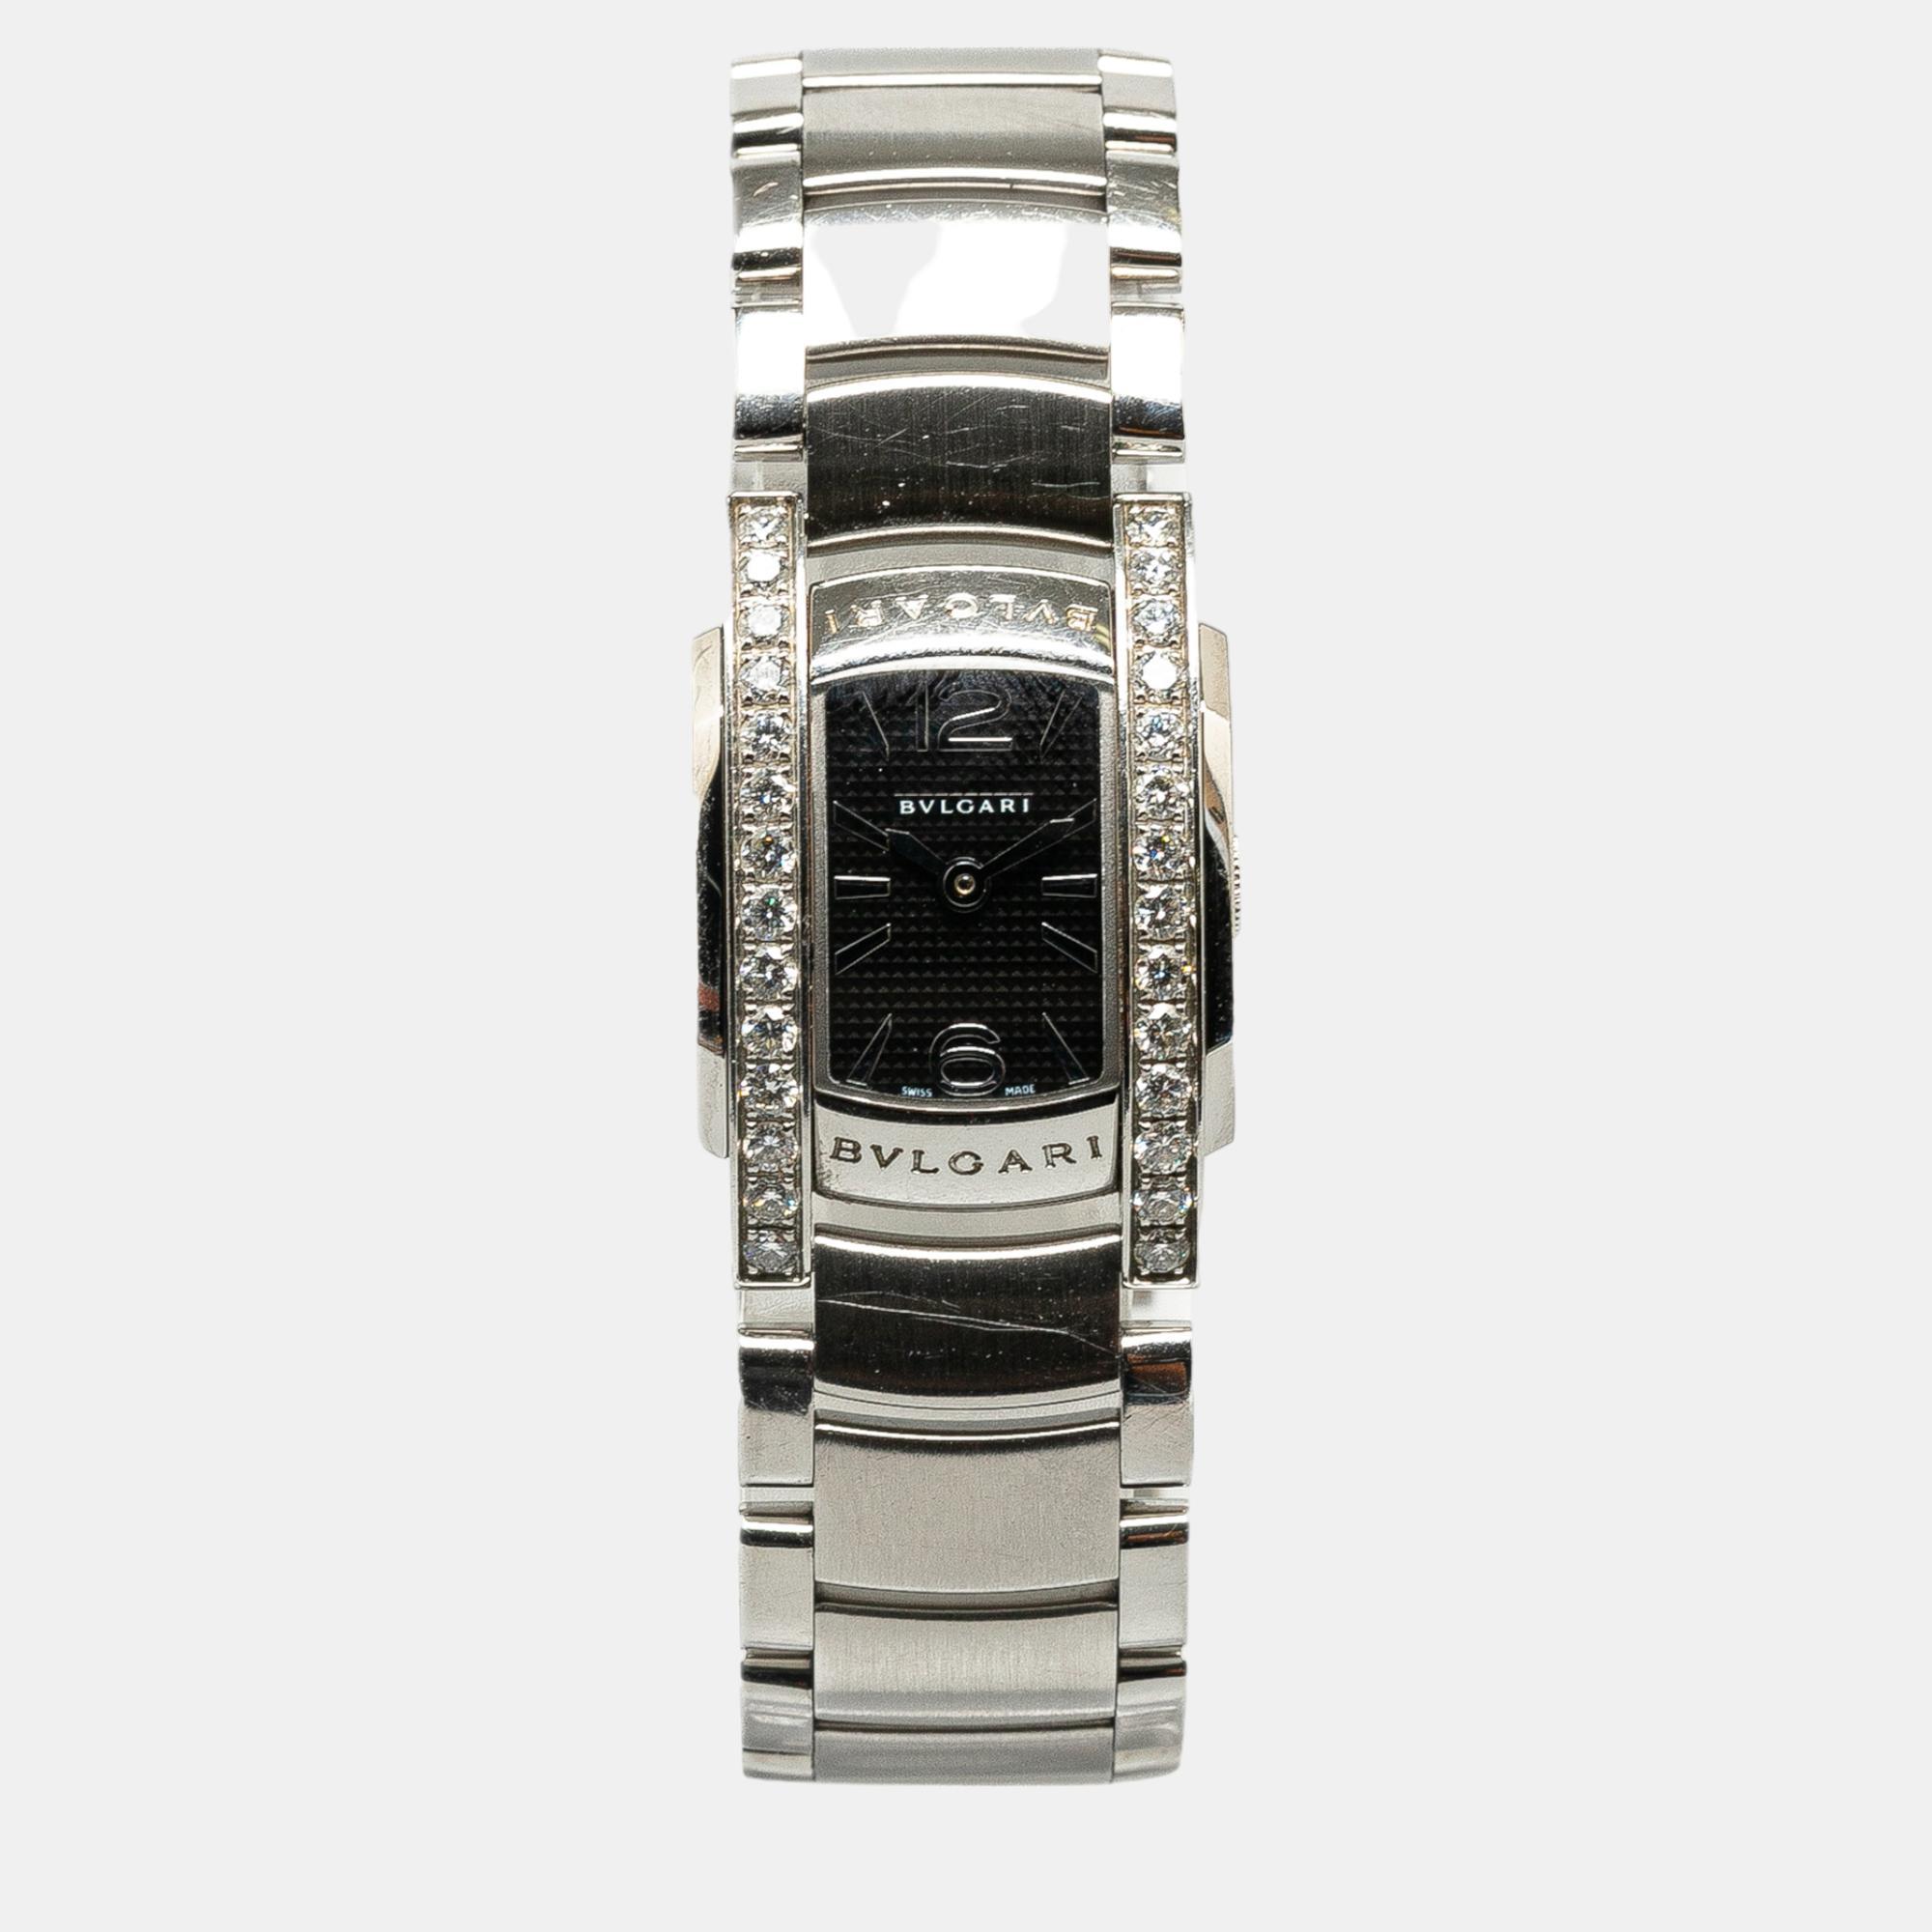 

Bvlgari Black Quartz Stainless Steel with Diamonds Assioma Watch